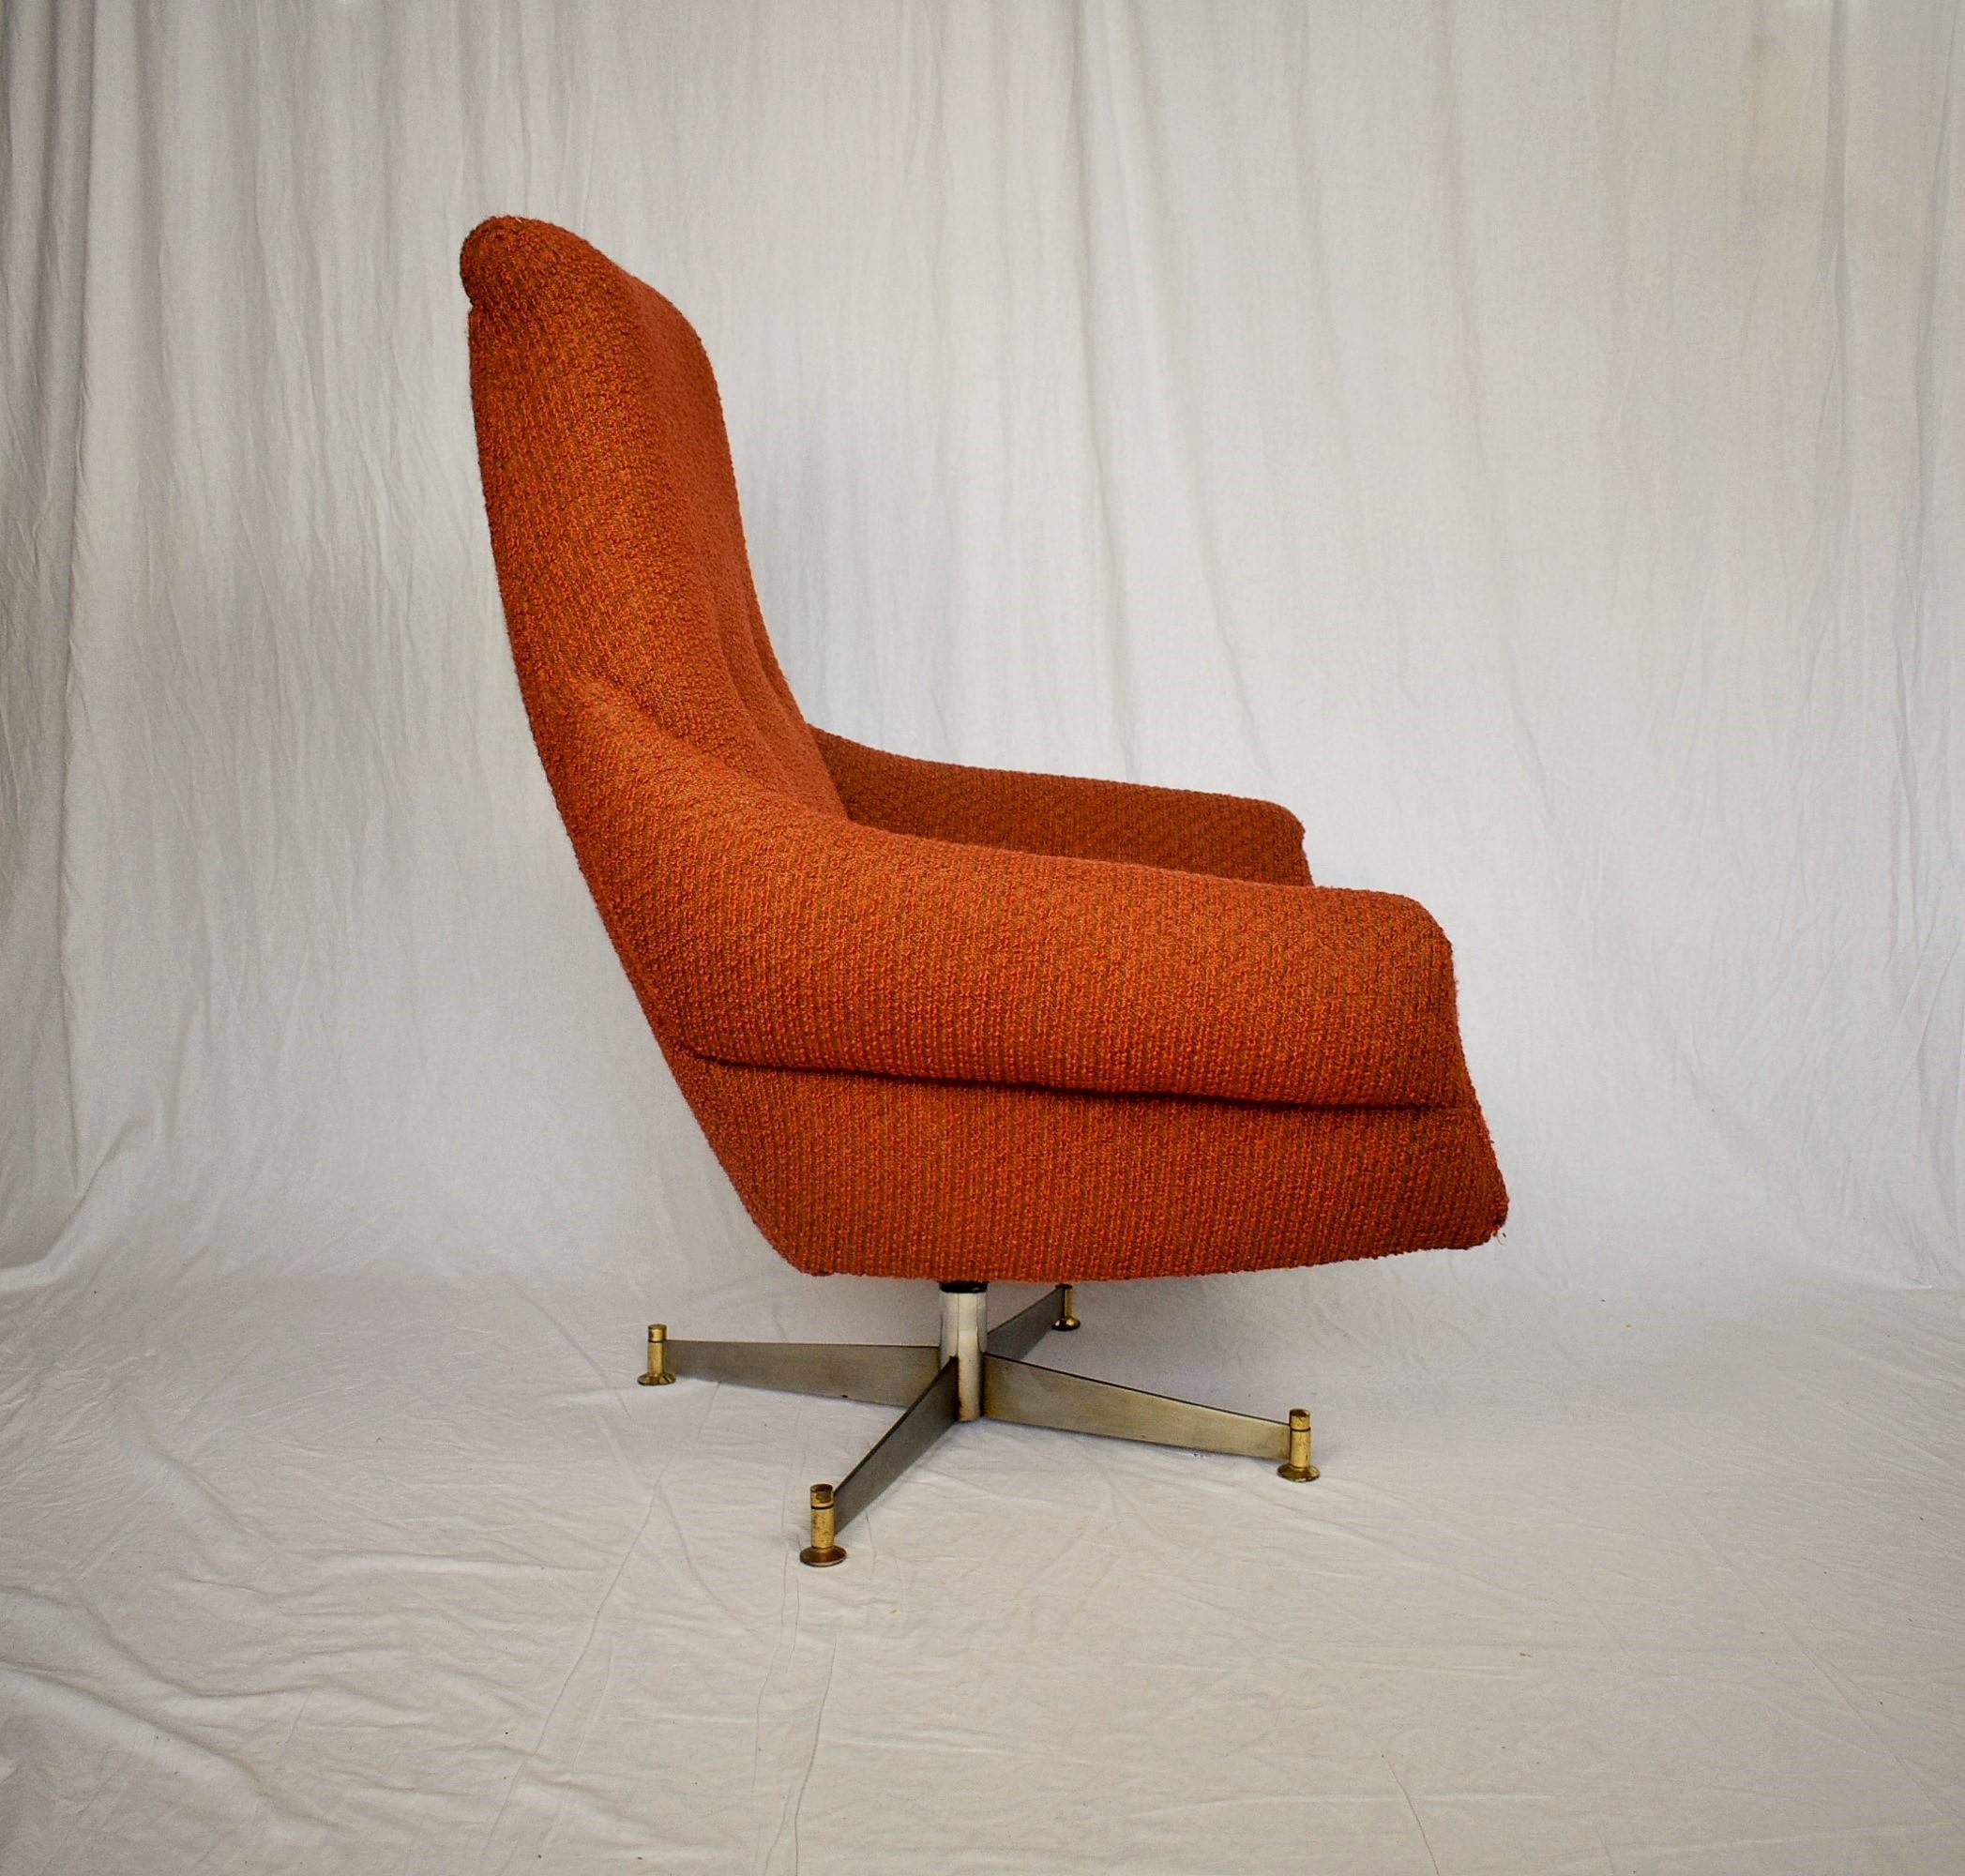 - Made in Italy
- Made of metal, fabric
- Original upholstrey
- Very comfortable
- Good, original condition.